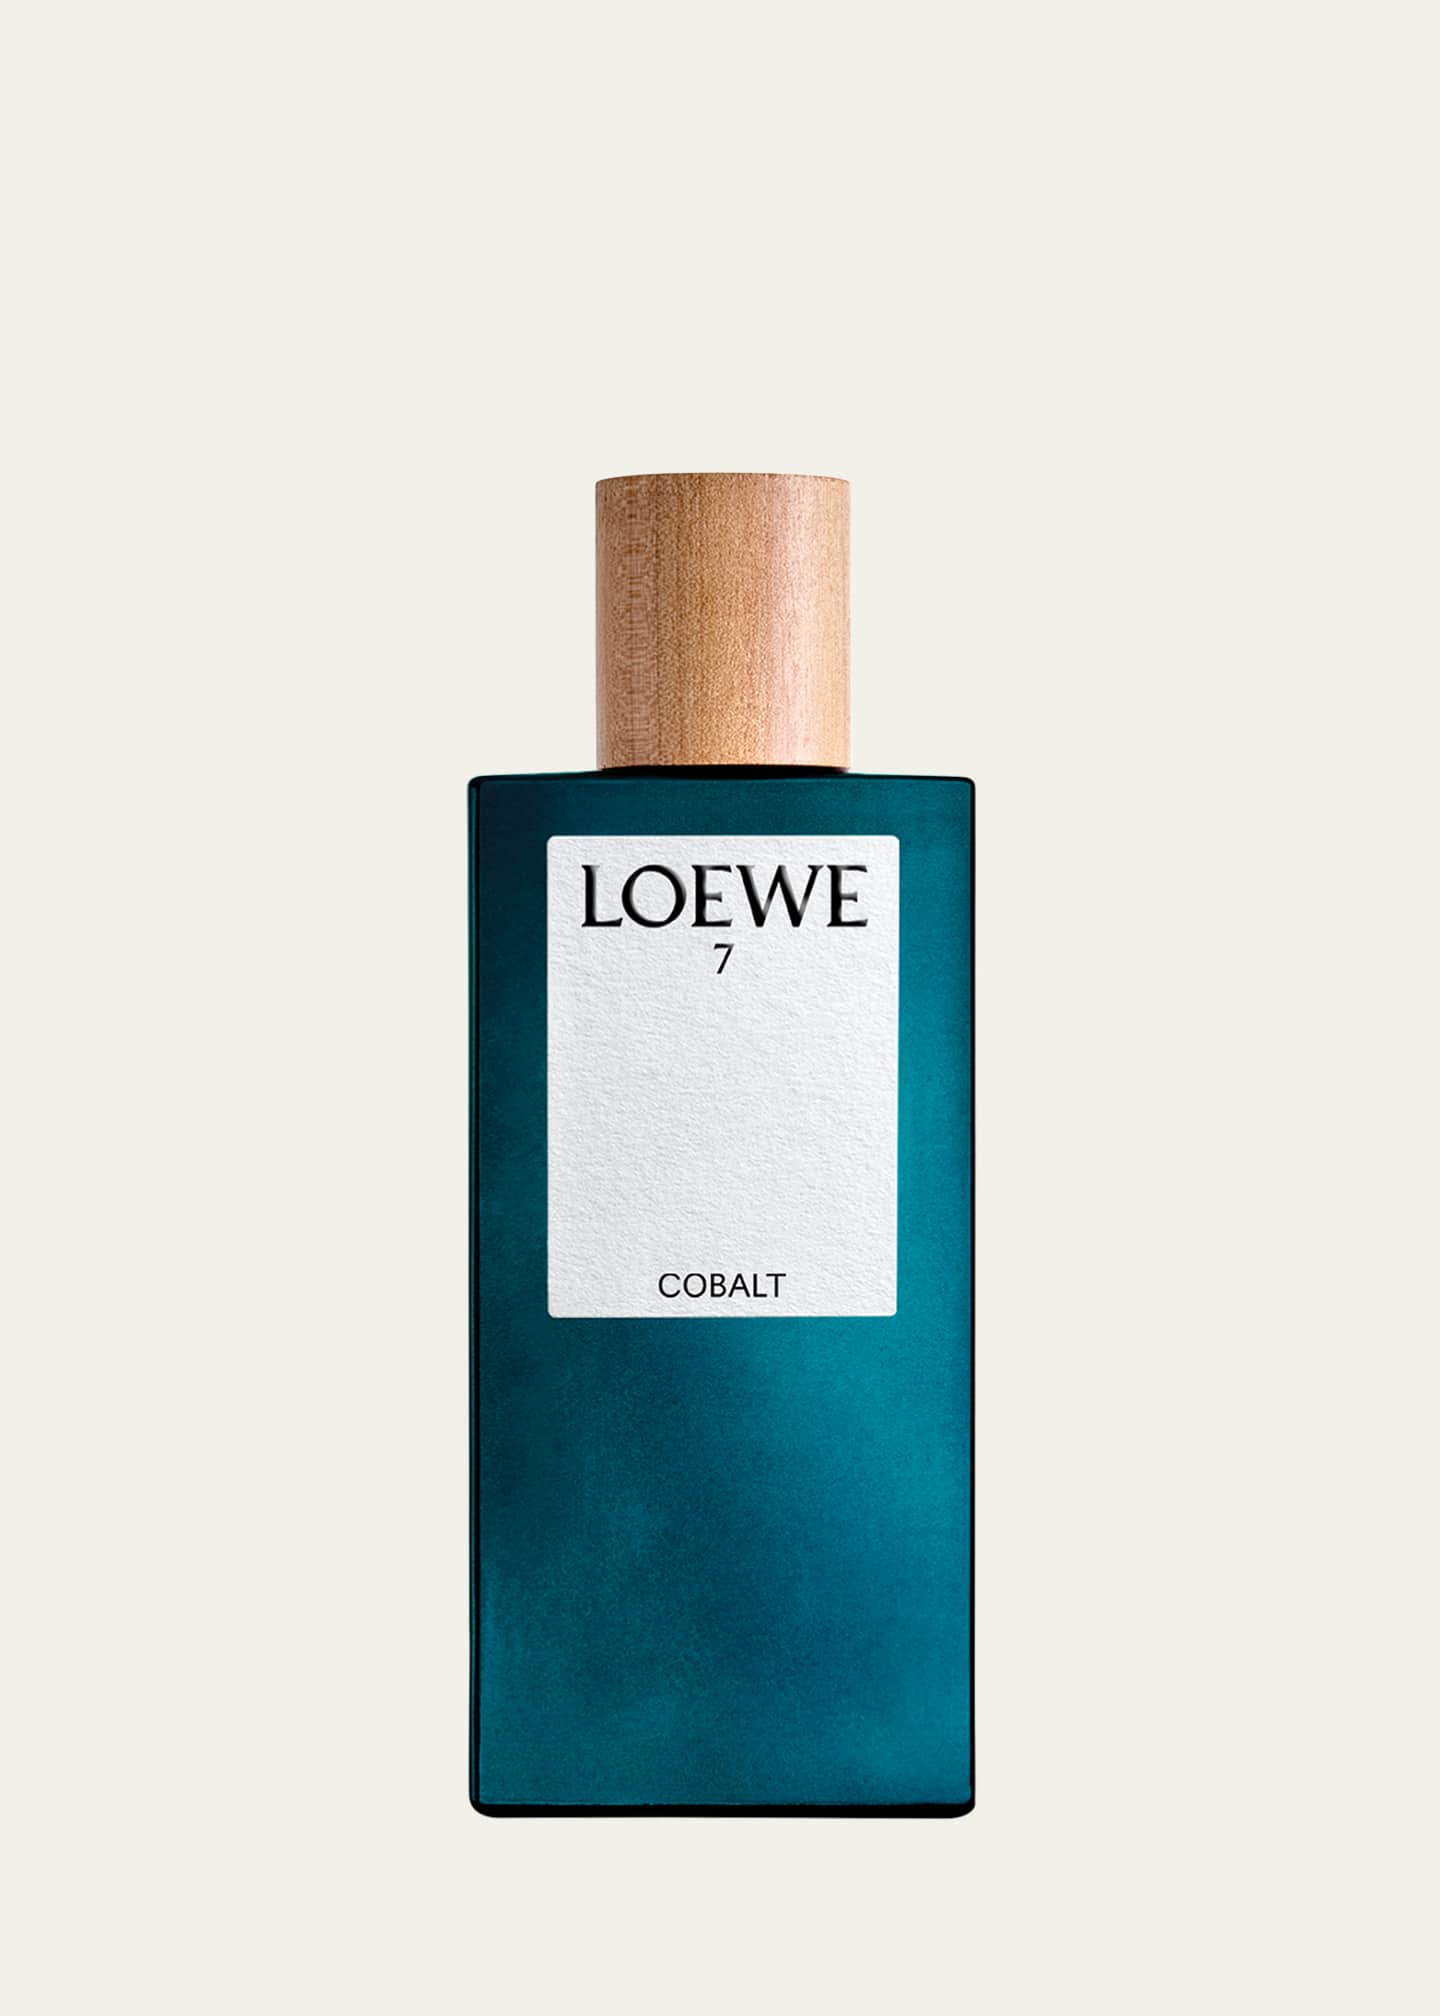 Loewe 7 Cobalt Eau de Parfum, 3.4 oz. - Bergdorf Goodman